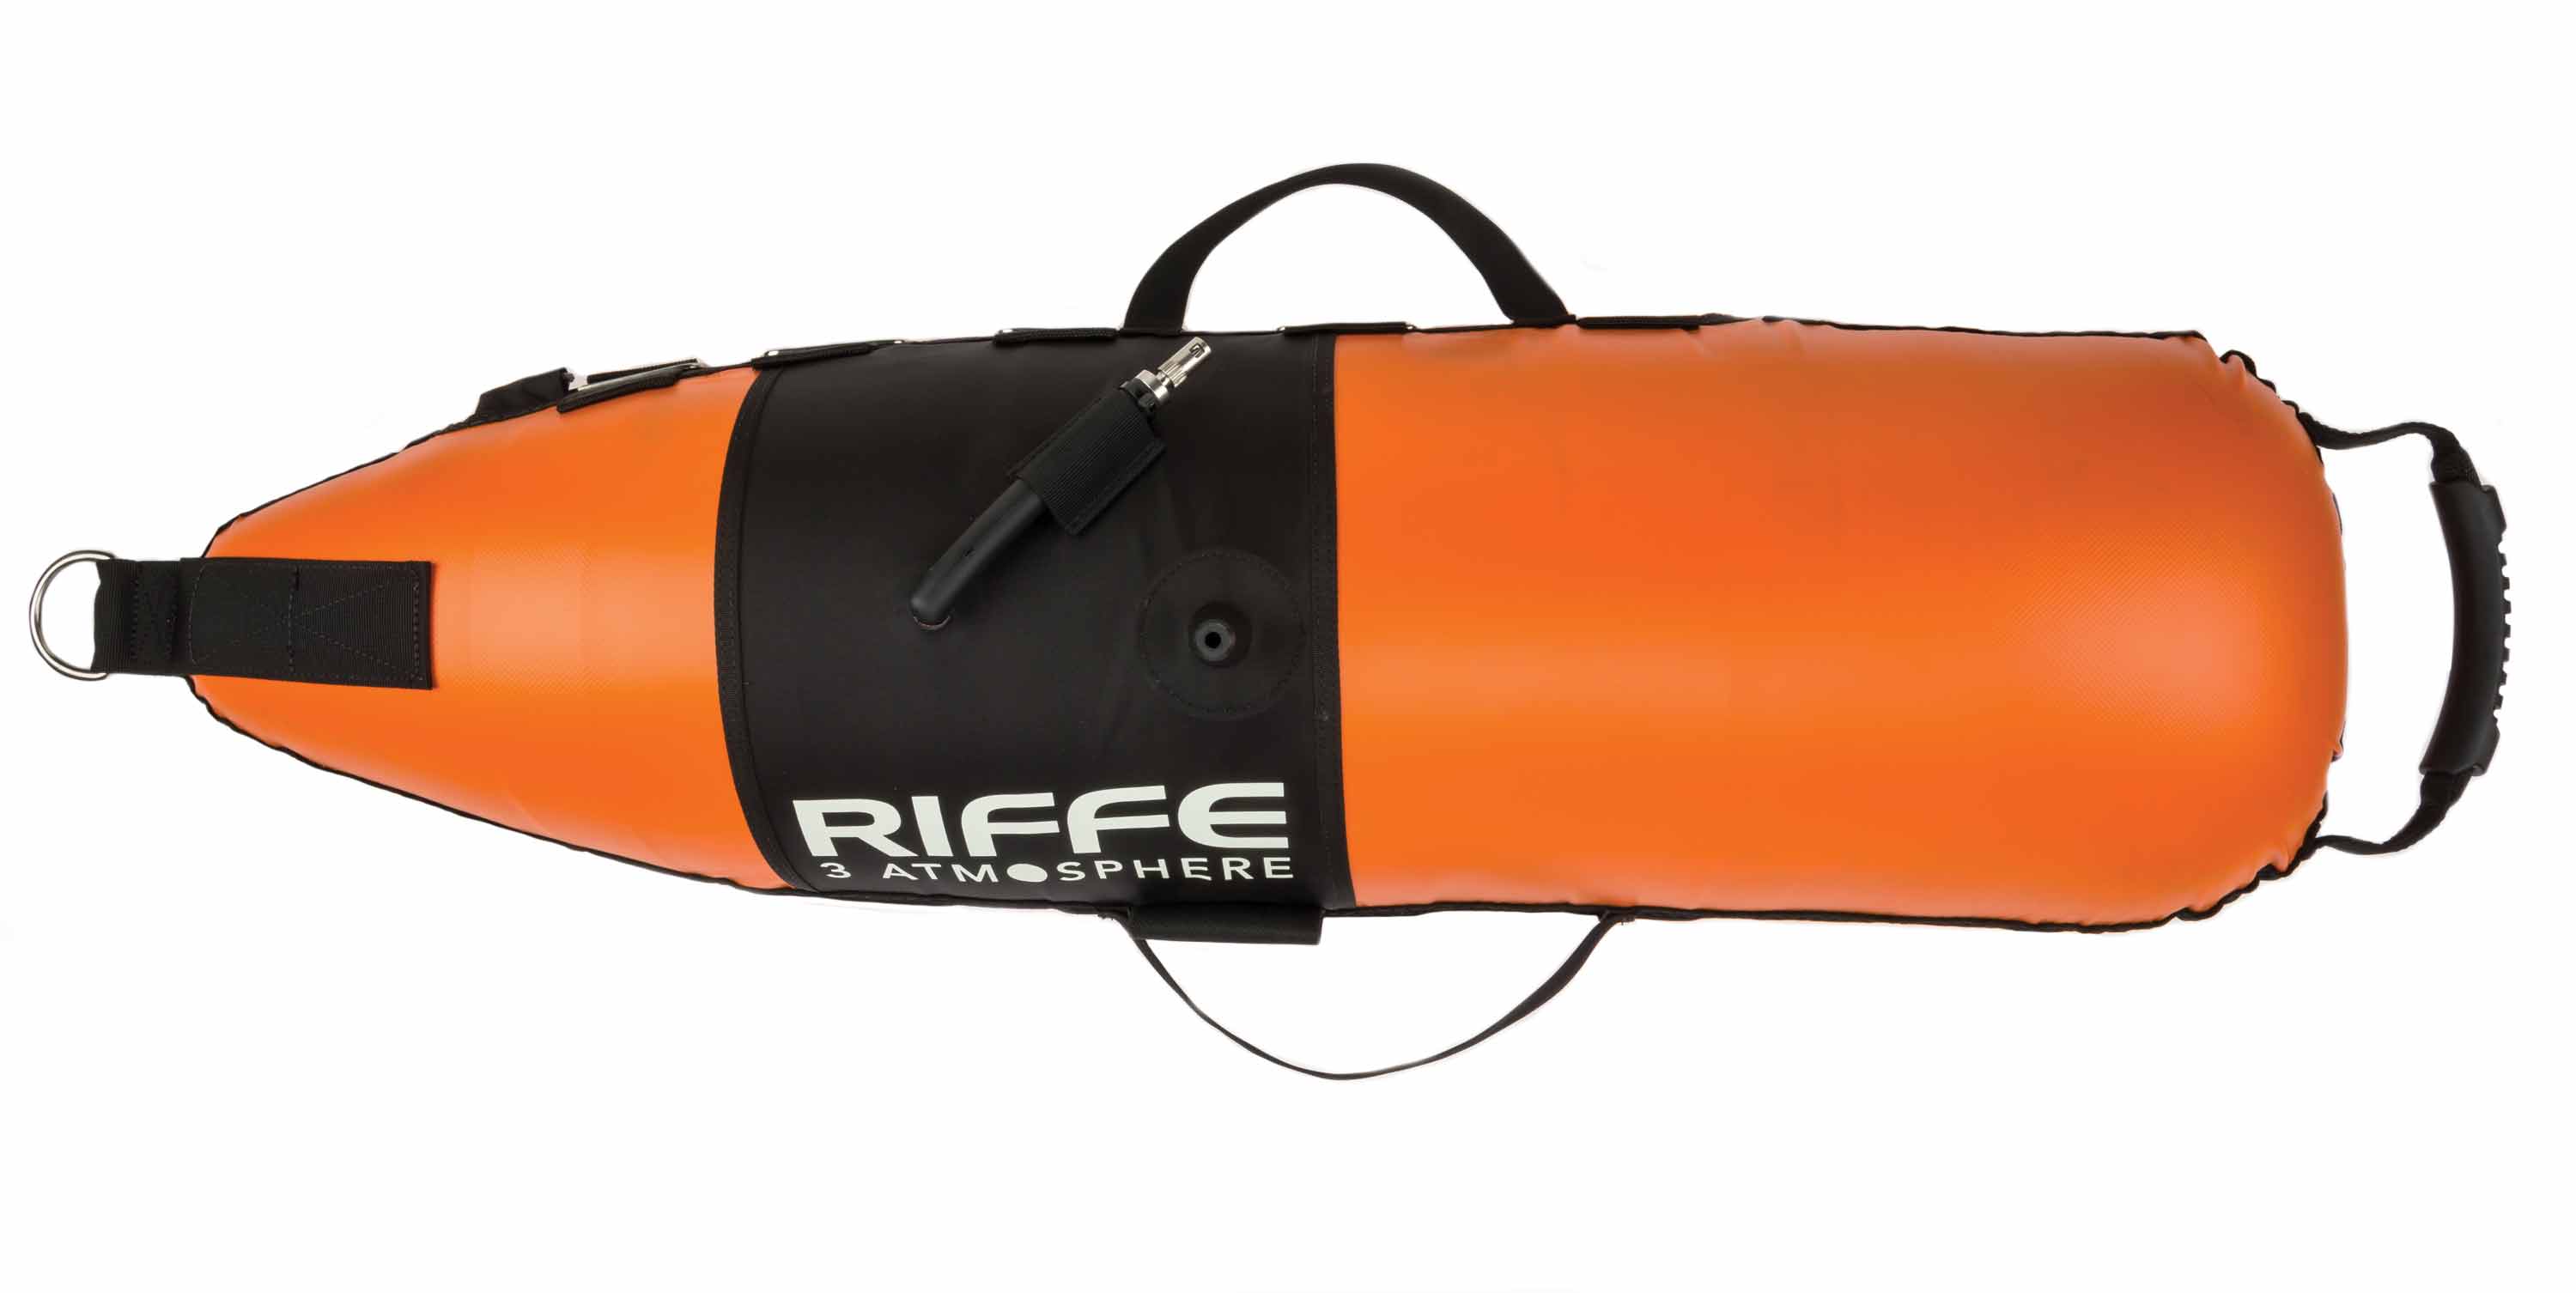 Gun Accessories Apnoe Freedive Spearfishing Throw Pillow, 16x16, Multicolor